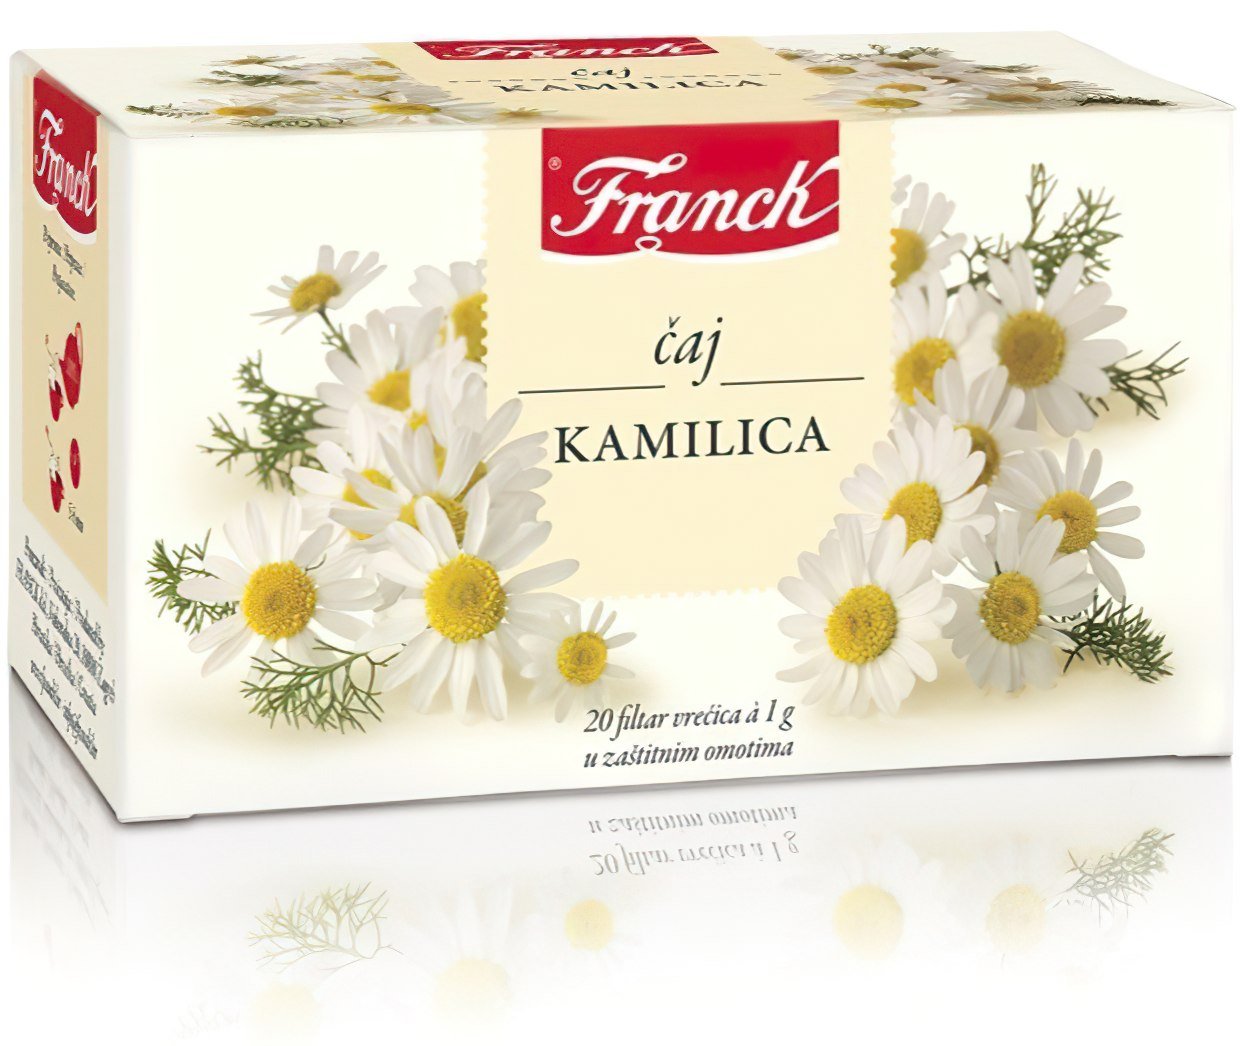 Franck Kamilica Chamomile Tea